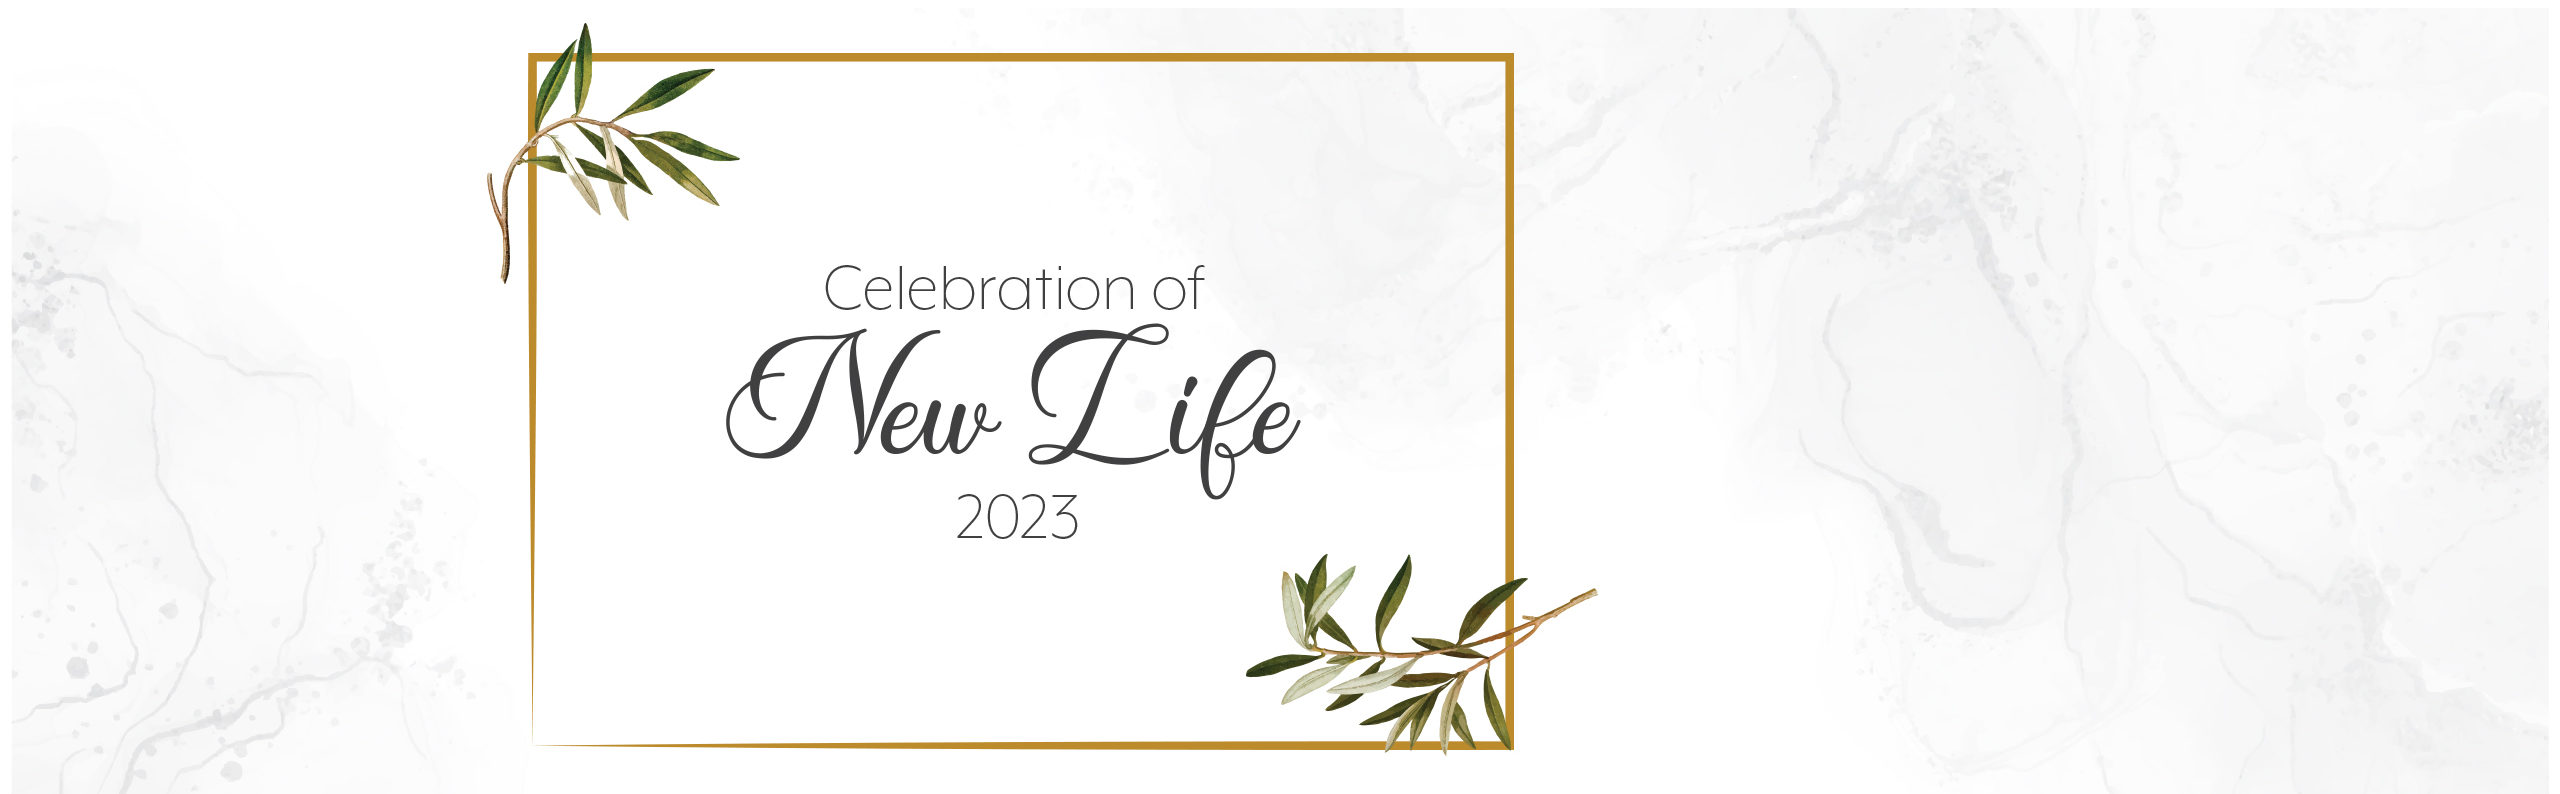 Annual Banquet homepage banner